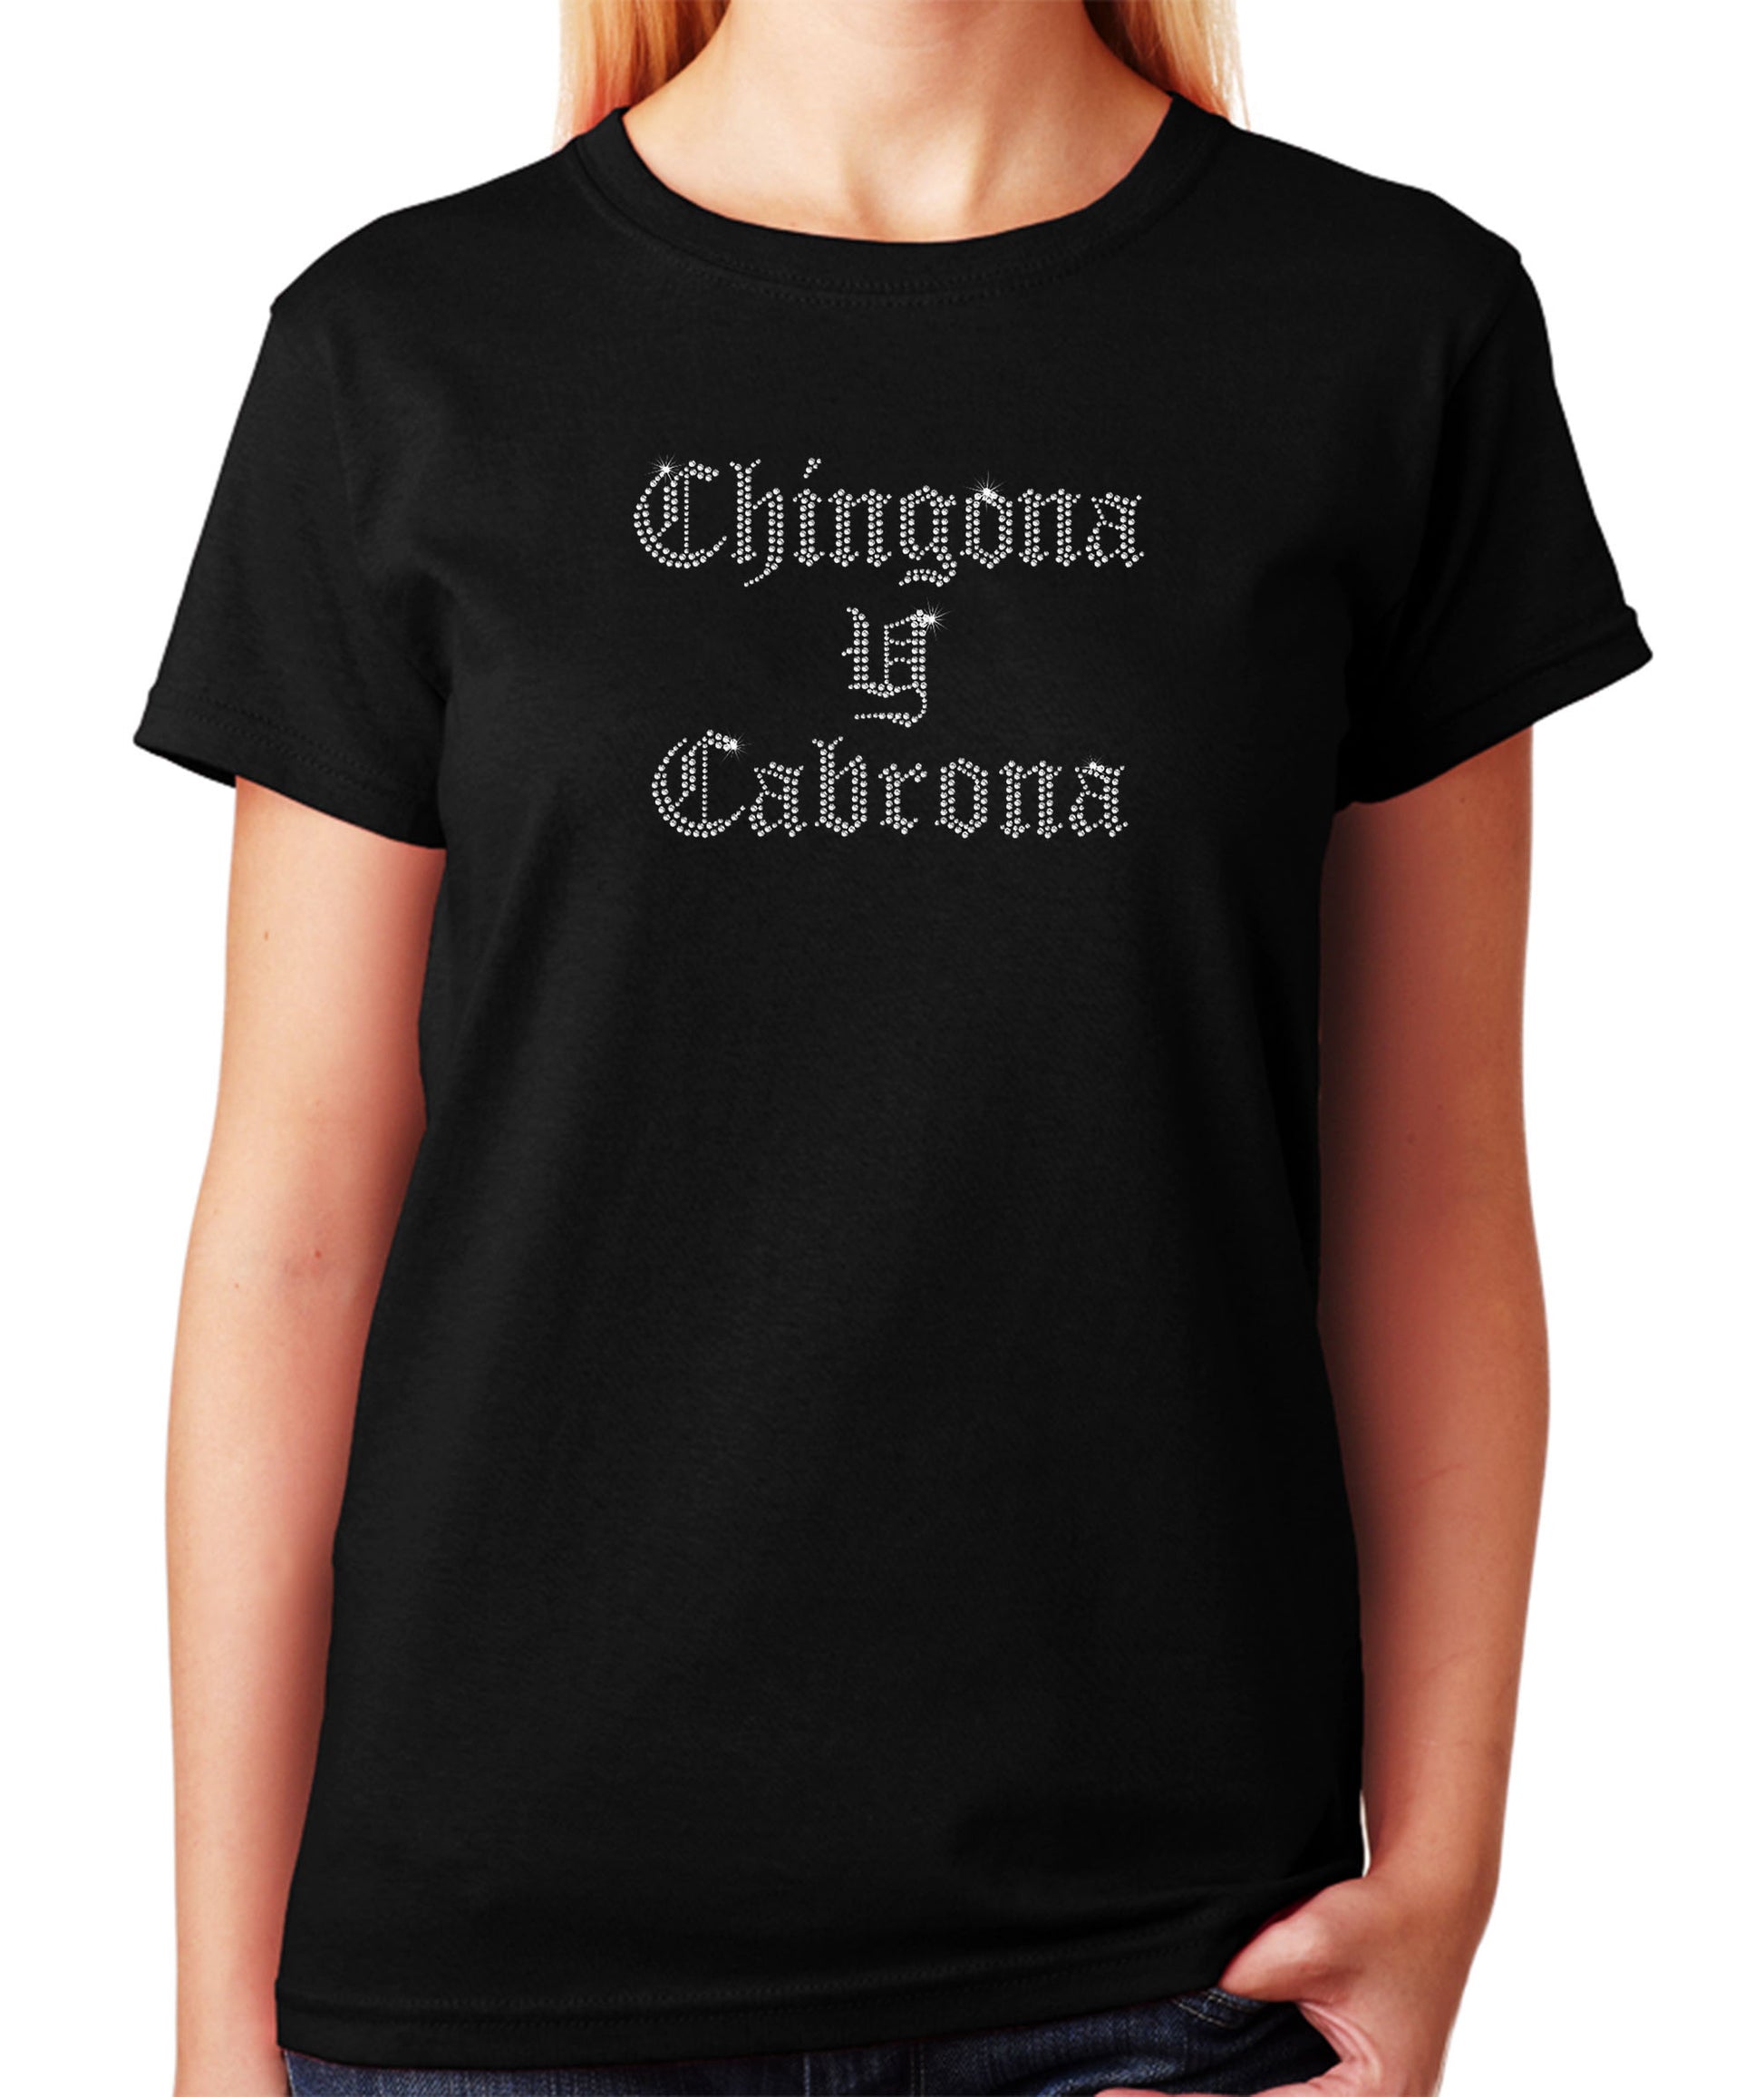 Women's / Unisex T-Shirt with Chingona y Cabrona in Rhinestones